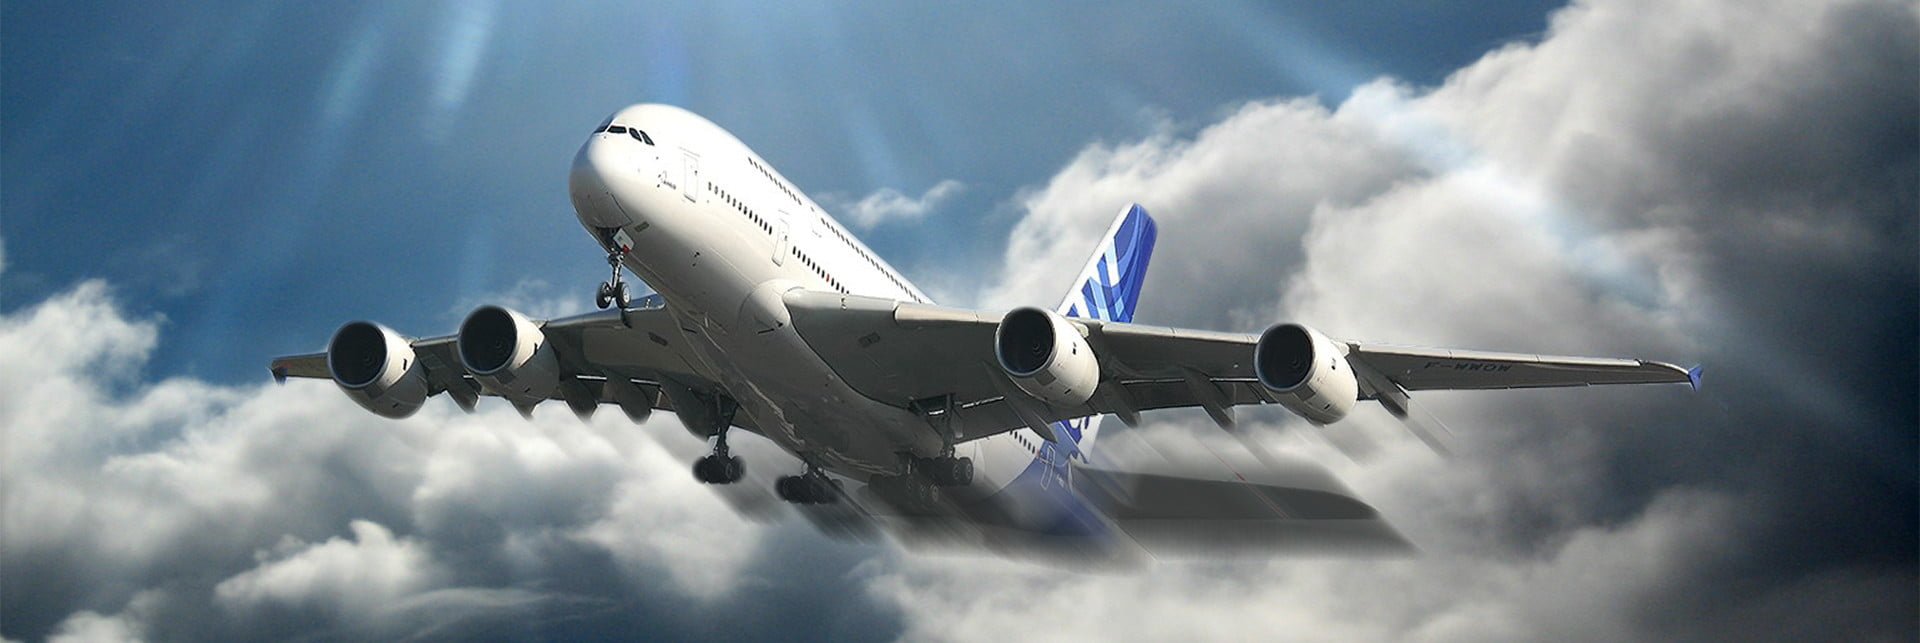 Airbus A380 800 Takeoff By Lofty1985 D5Bvtt4 E1423334362495 مجلة نقطة العلمية